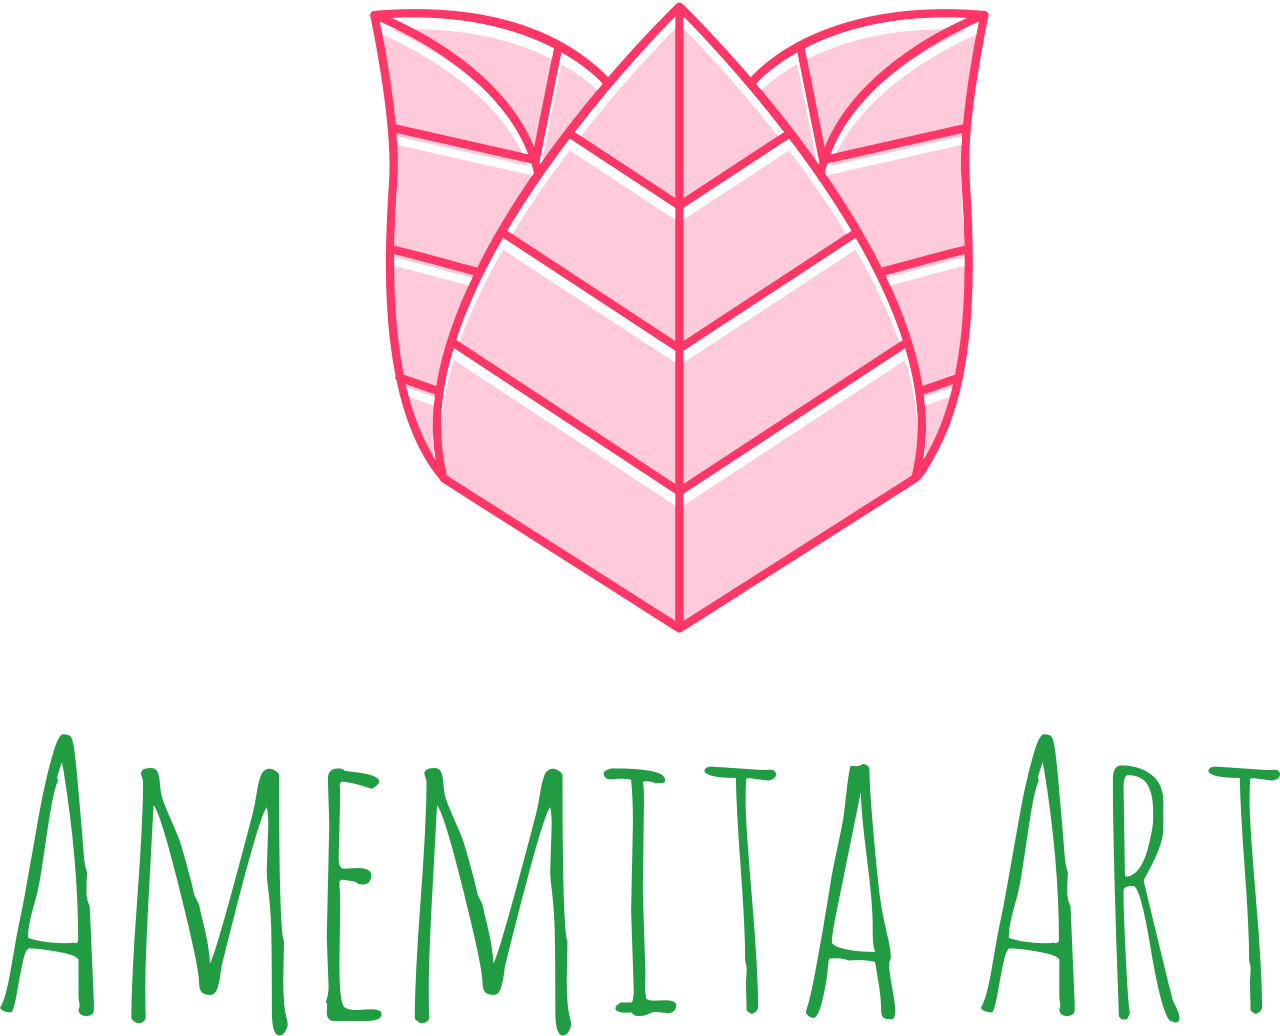 Amemita Art's logo